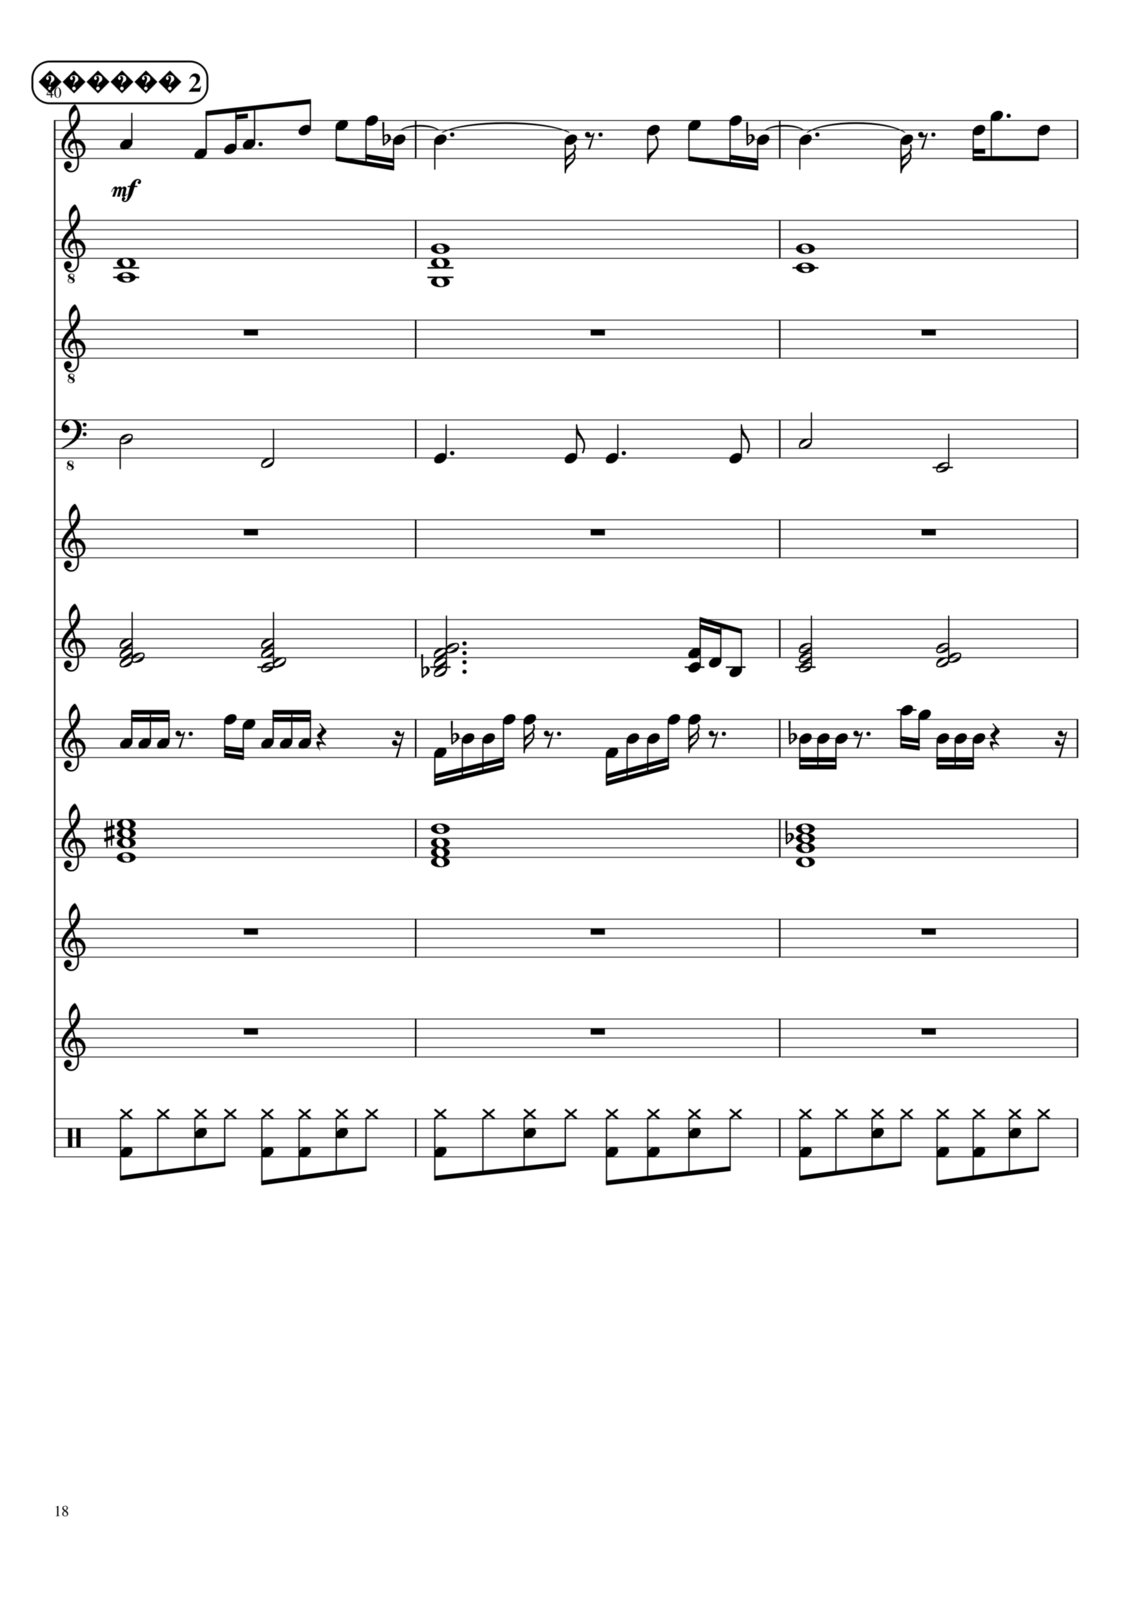 Gorod, kotorogo net slide, Image 18